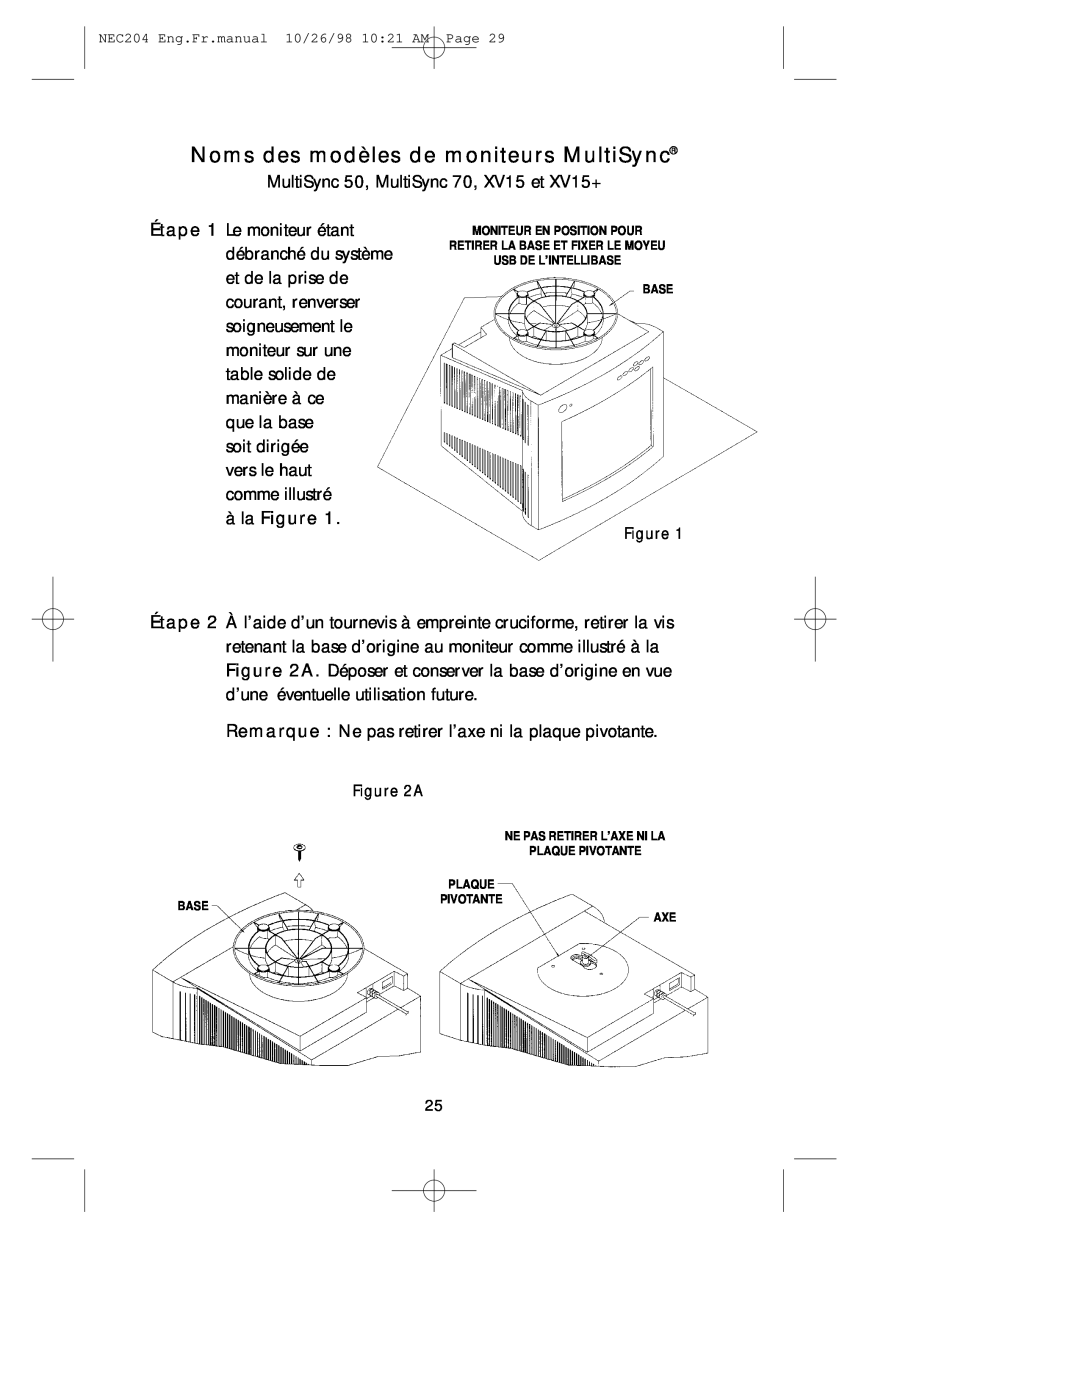 NEC A3844, IB-USB user manual Noms des modèles de moniteurs MultiSync, àla Figure 